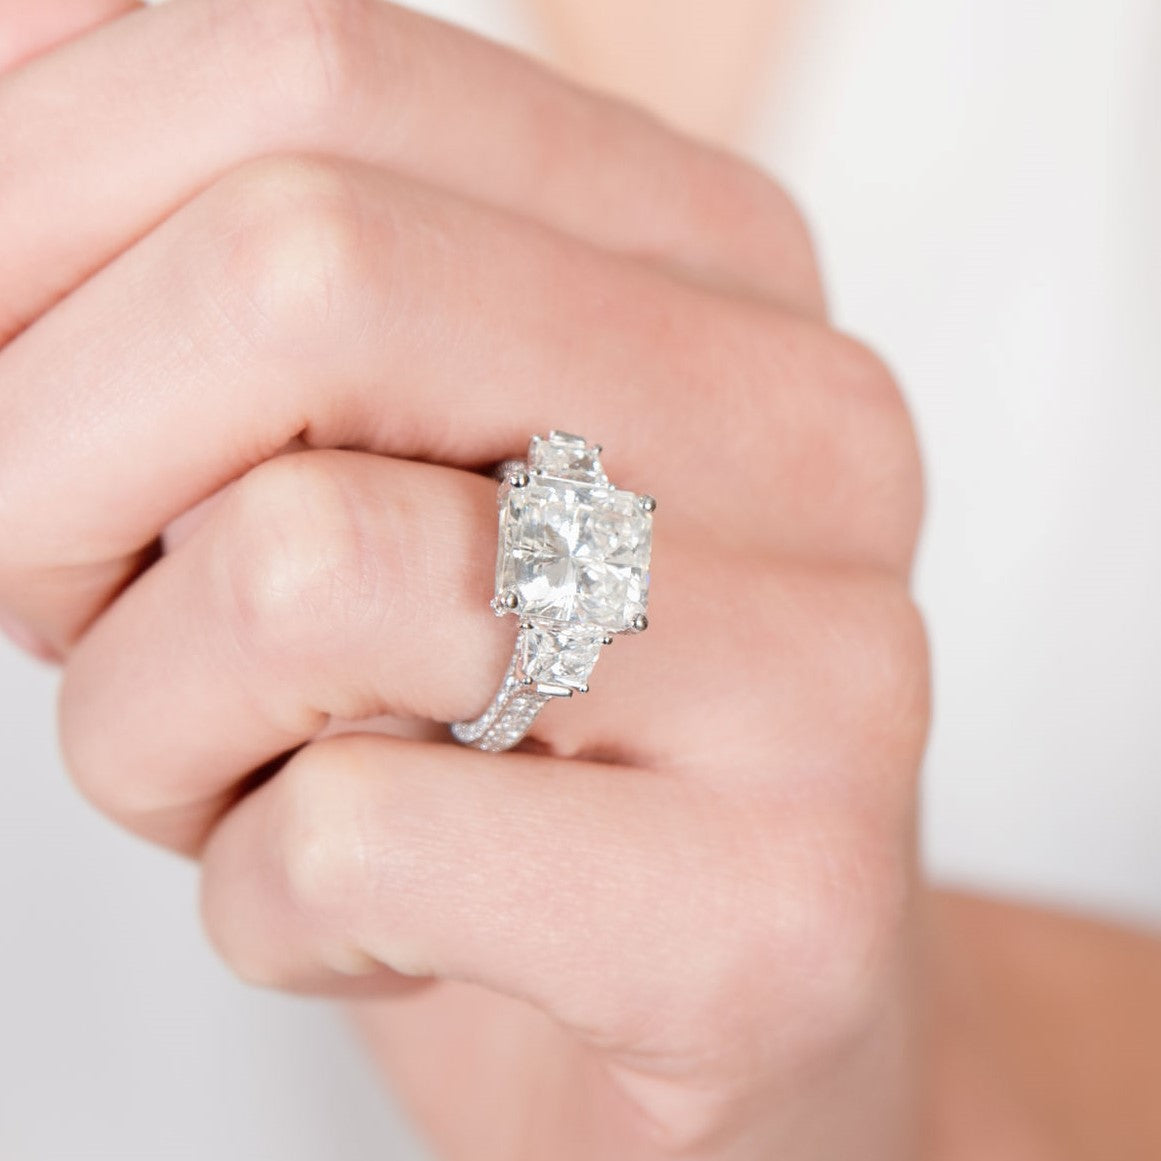 Woman wearing large princess cut diamond ring